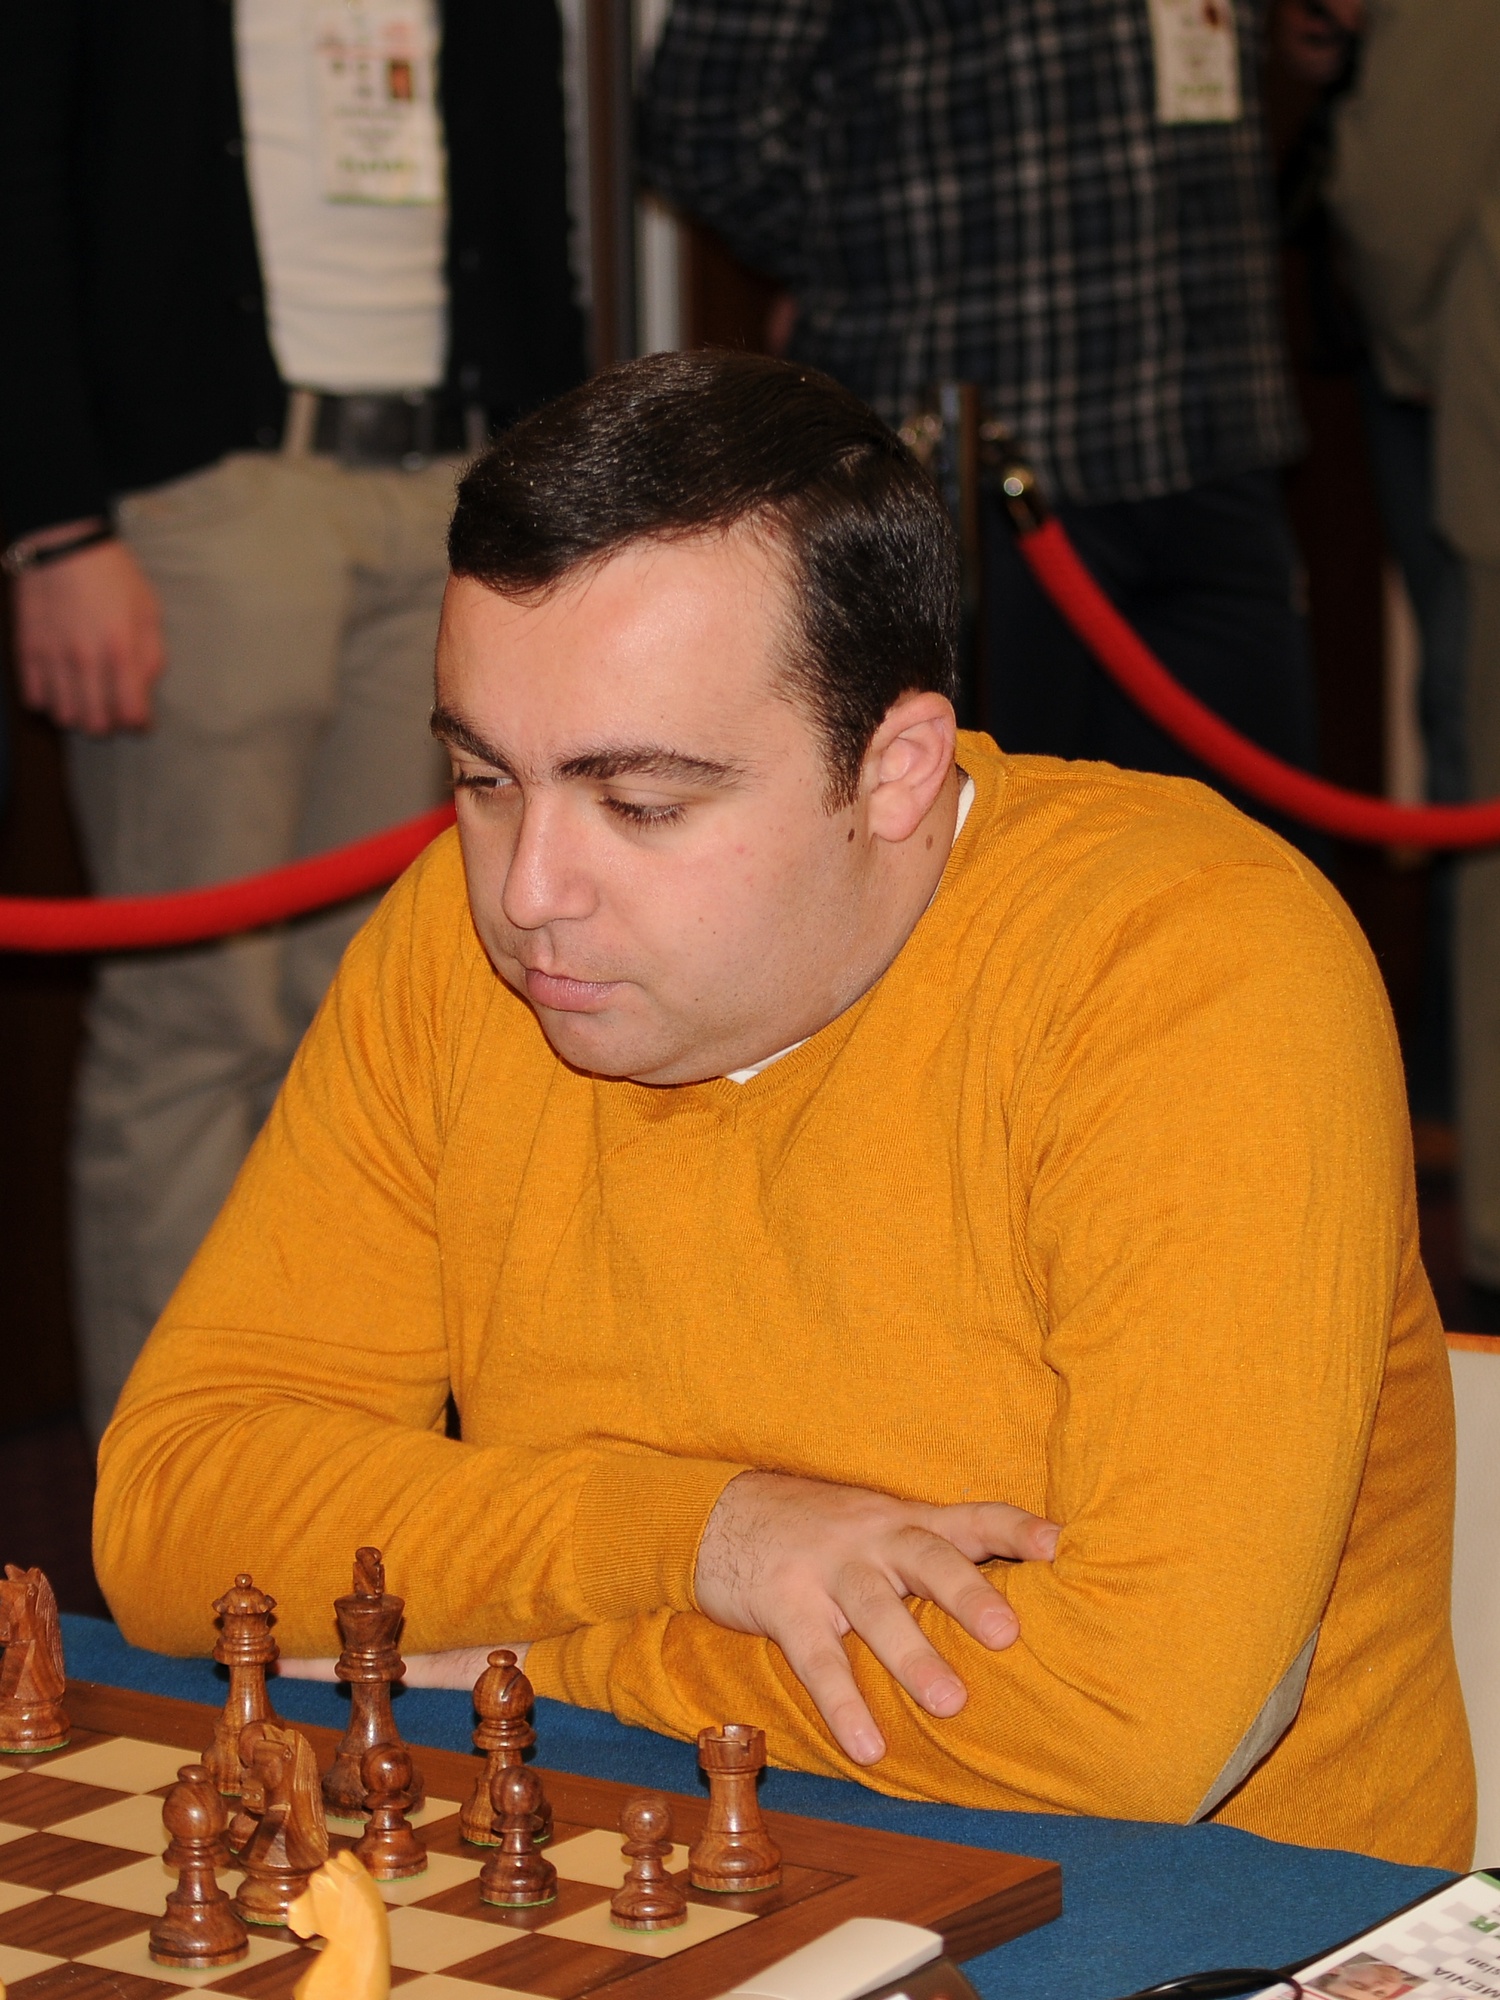 The Best Chess Games of Tigran L Petrosian 